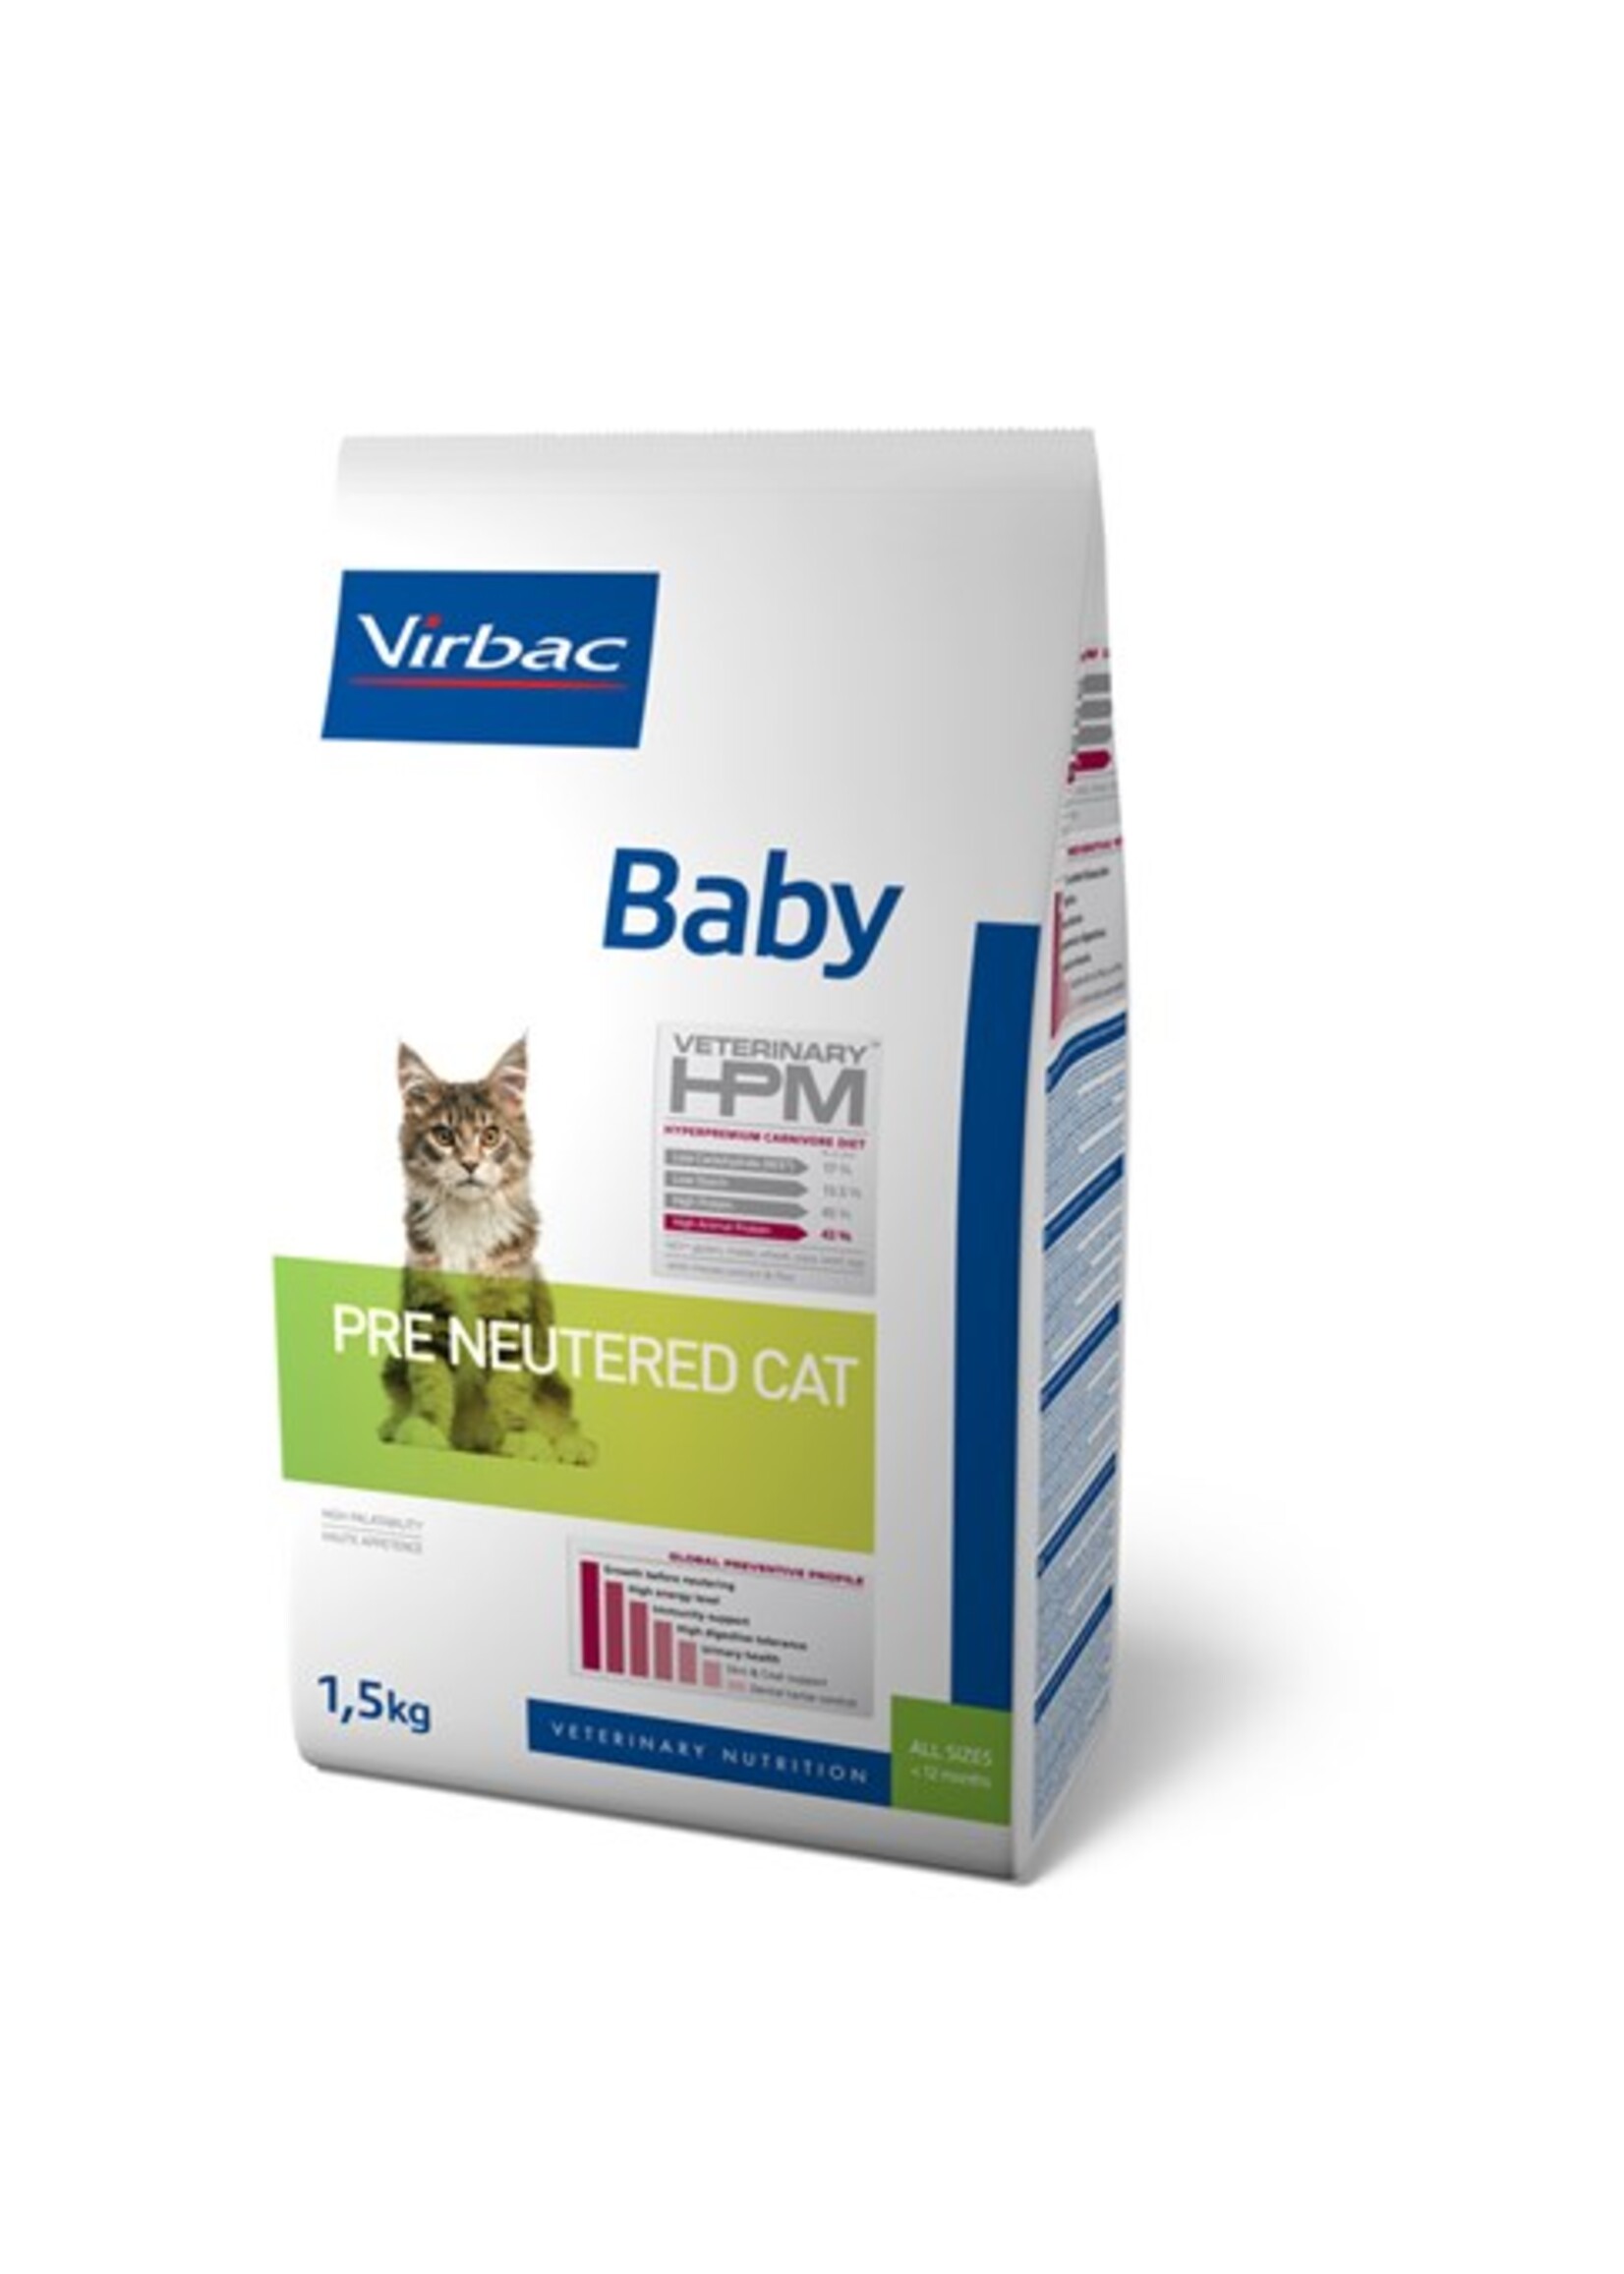 Virbac Virbac Hpm Kat Pre Neutered Baby 1,5kg